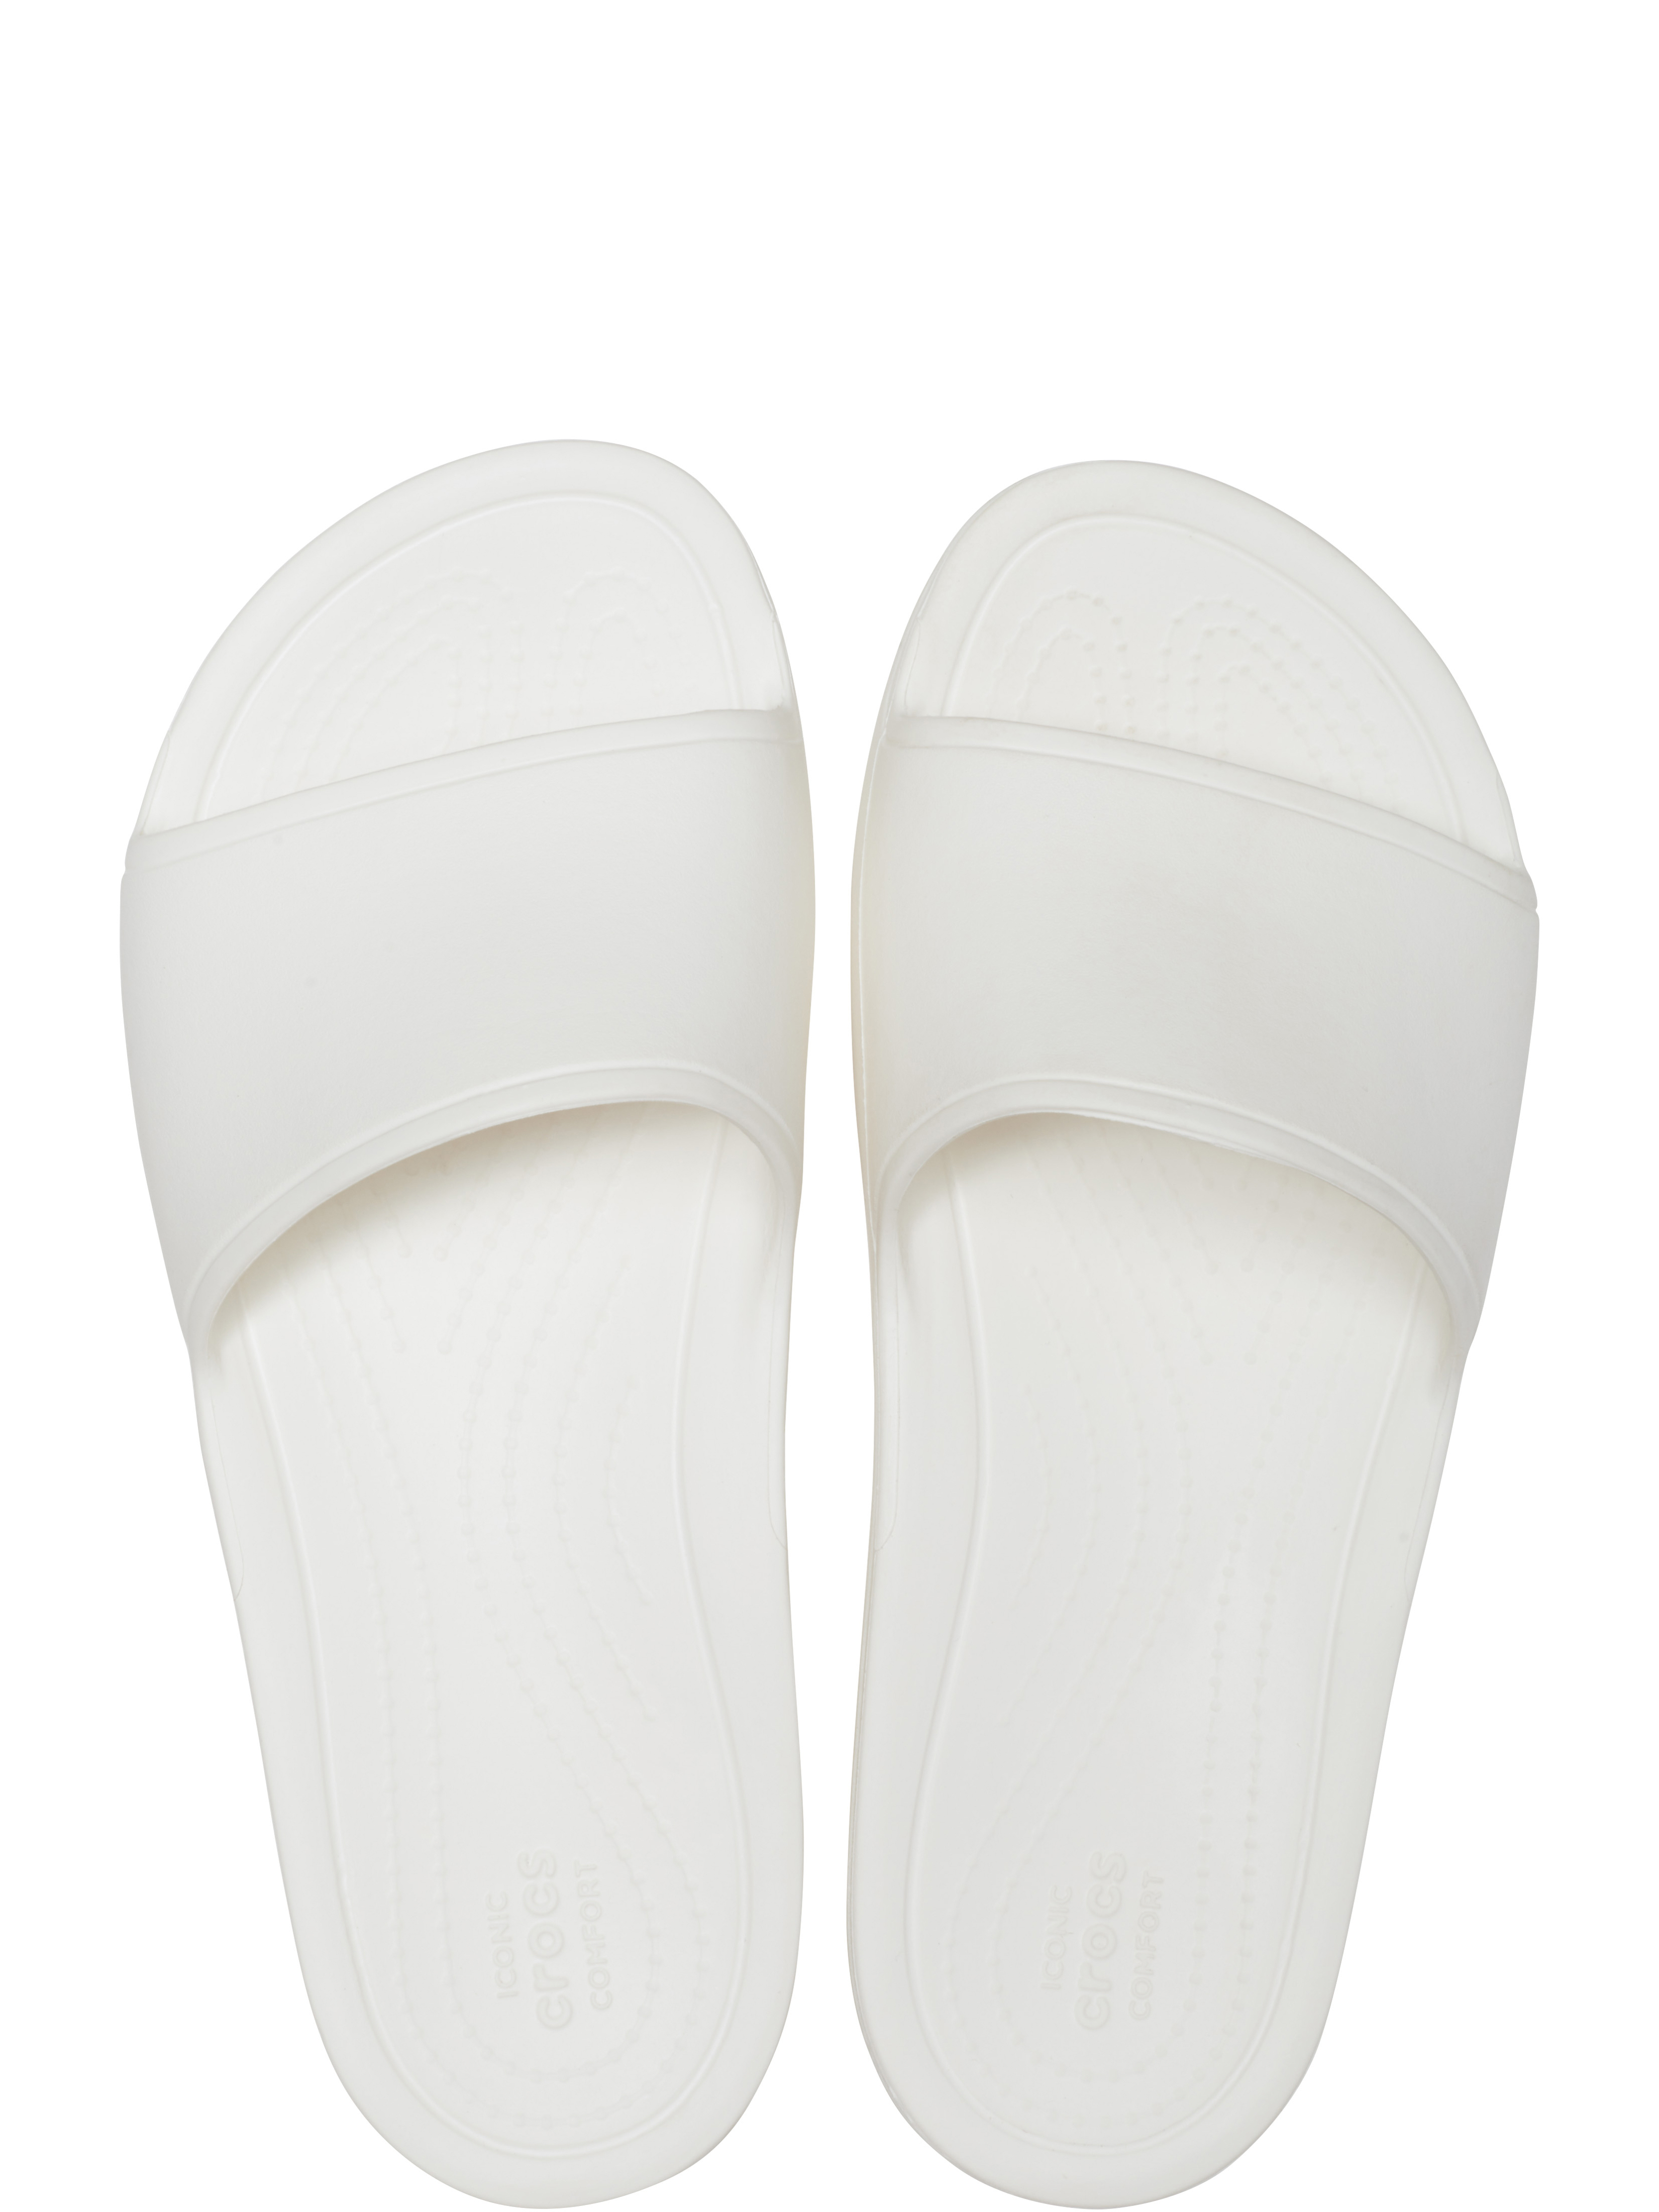 Crocs Women's Sloane Slide Sandals - image 3 of 6